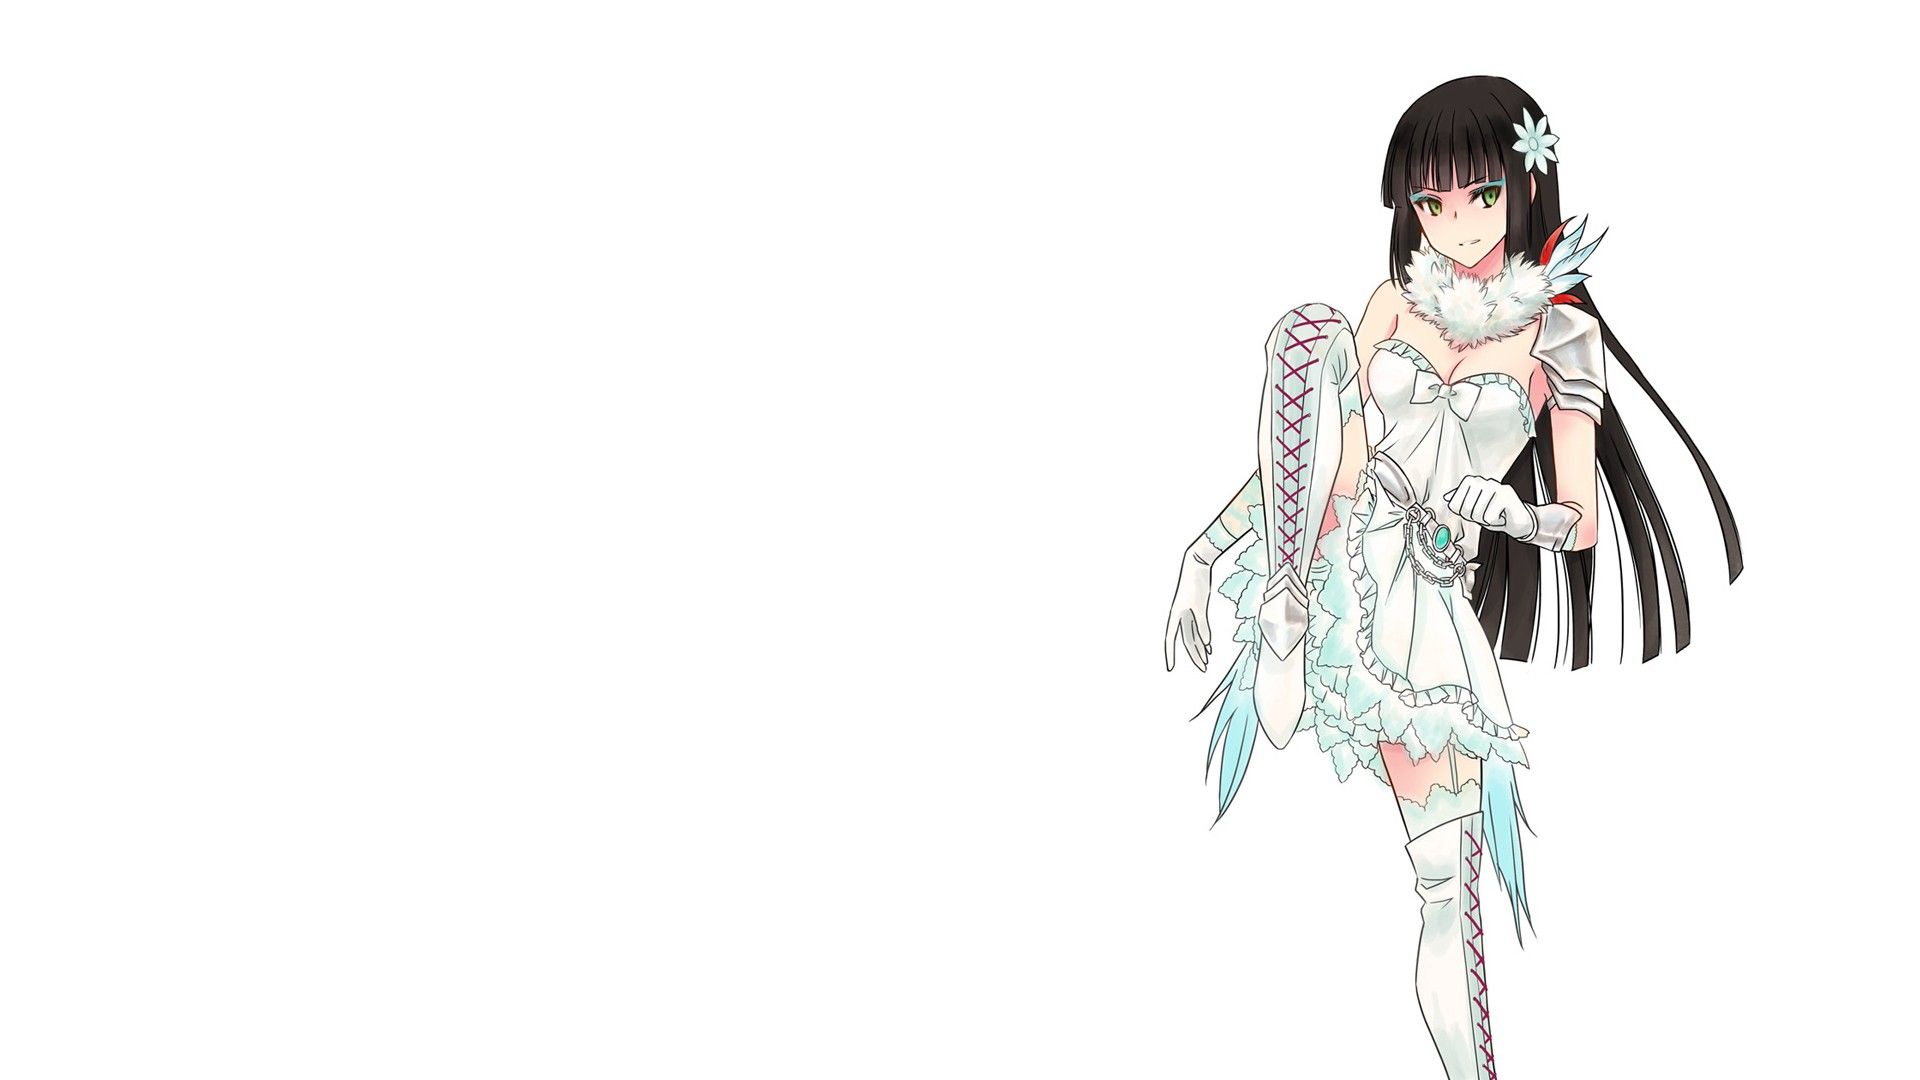 Wallpapers Anime Girl With White Long Hair Girls Armor Stockings